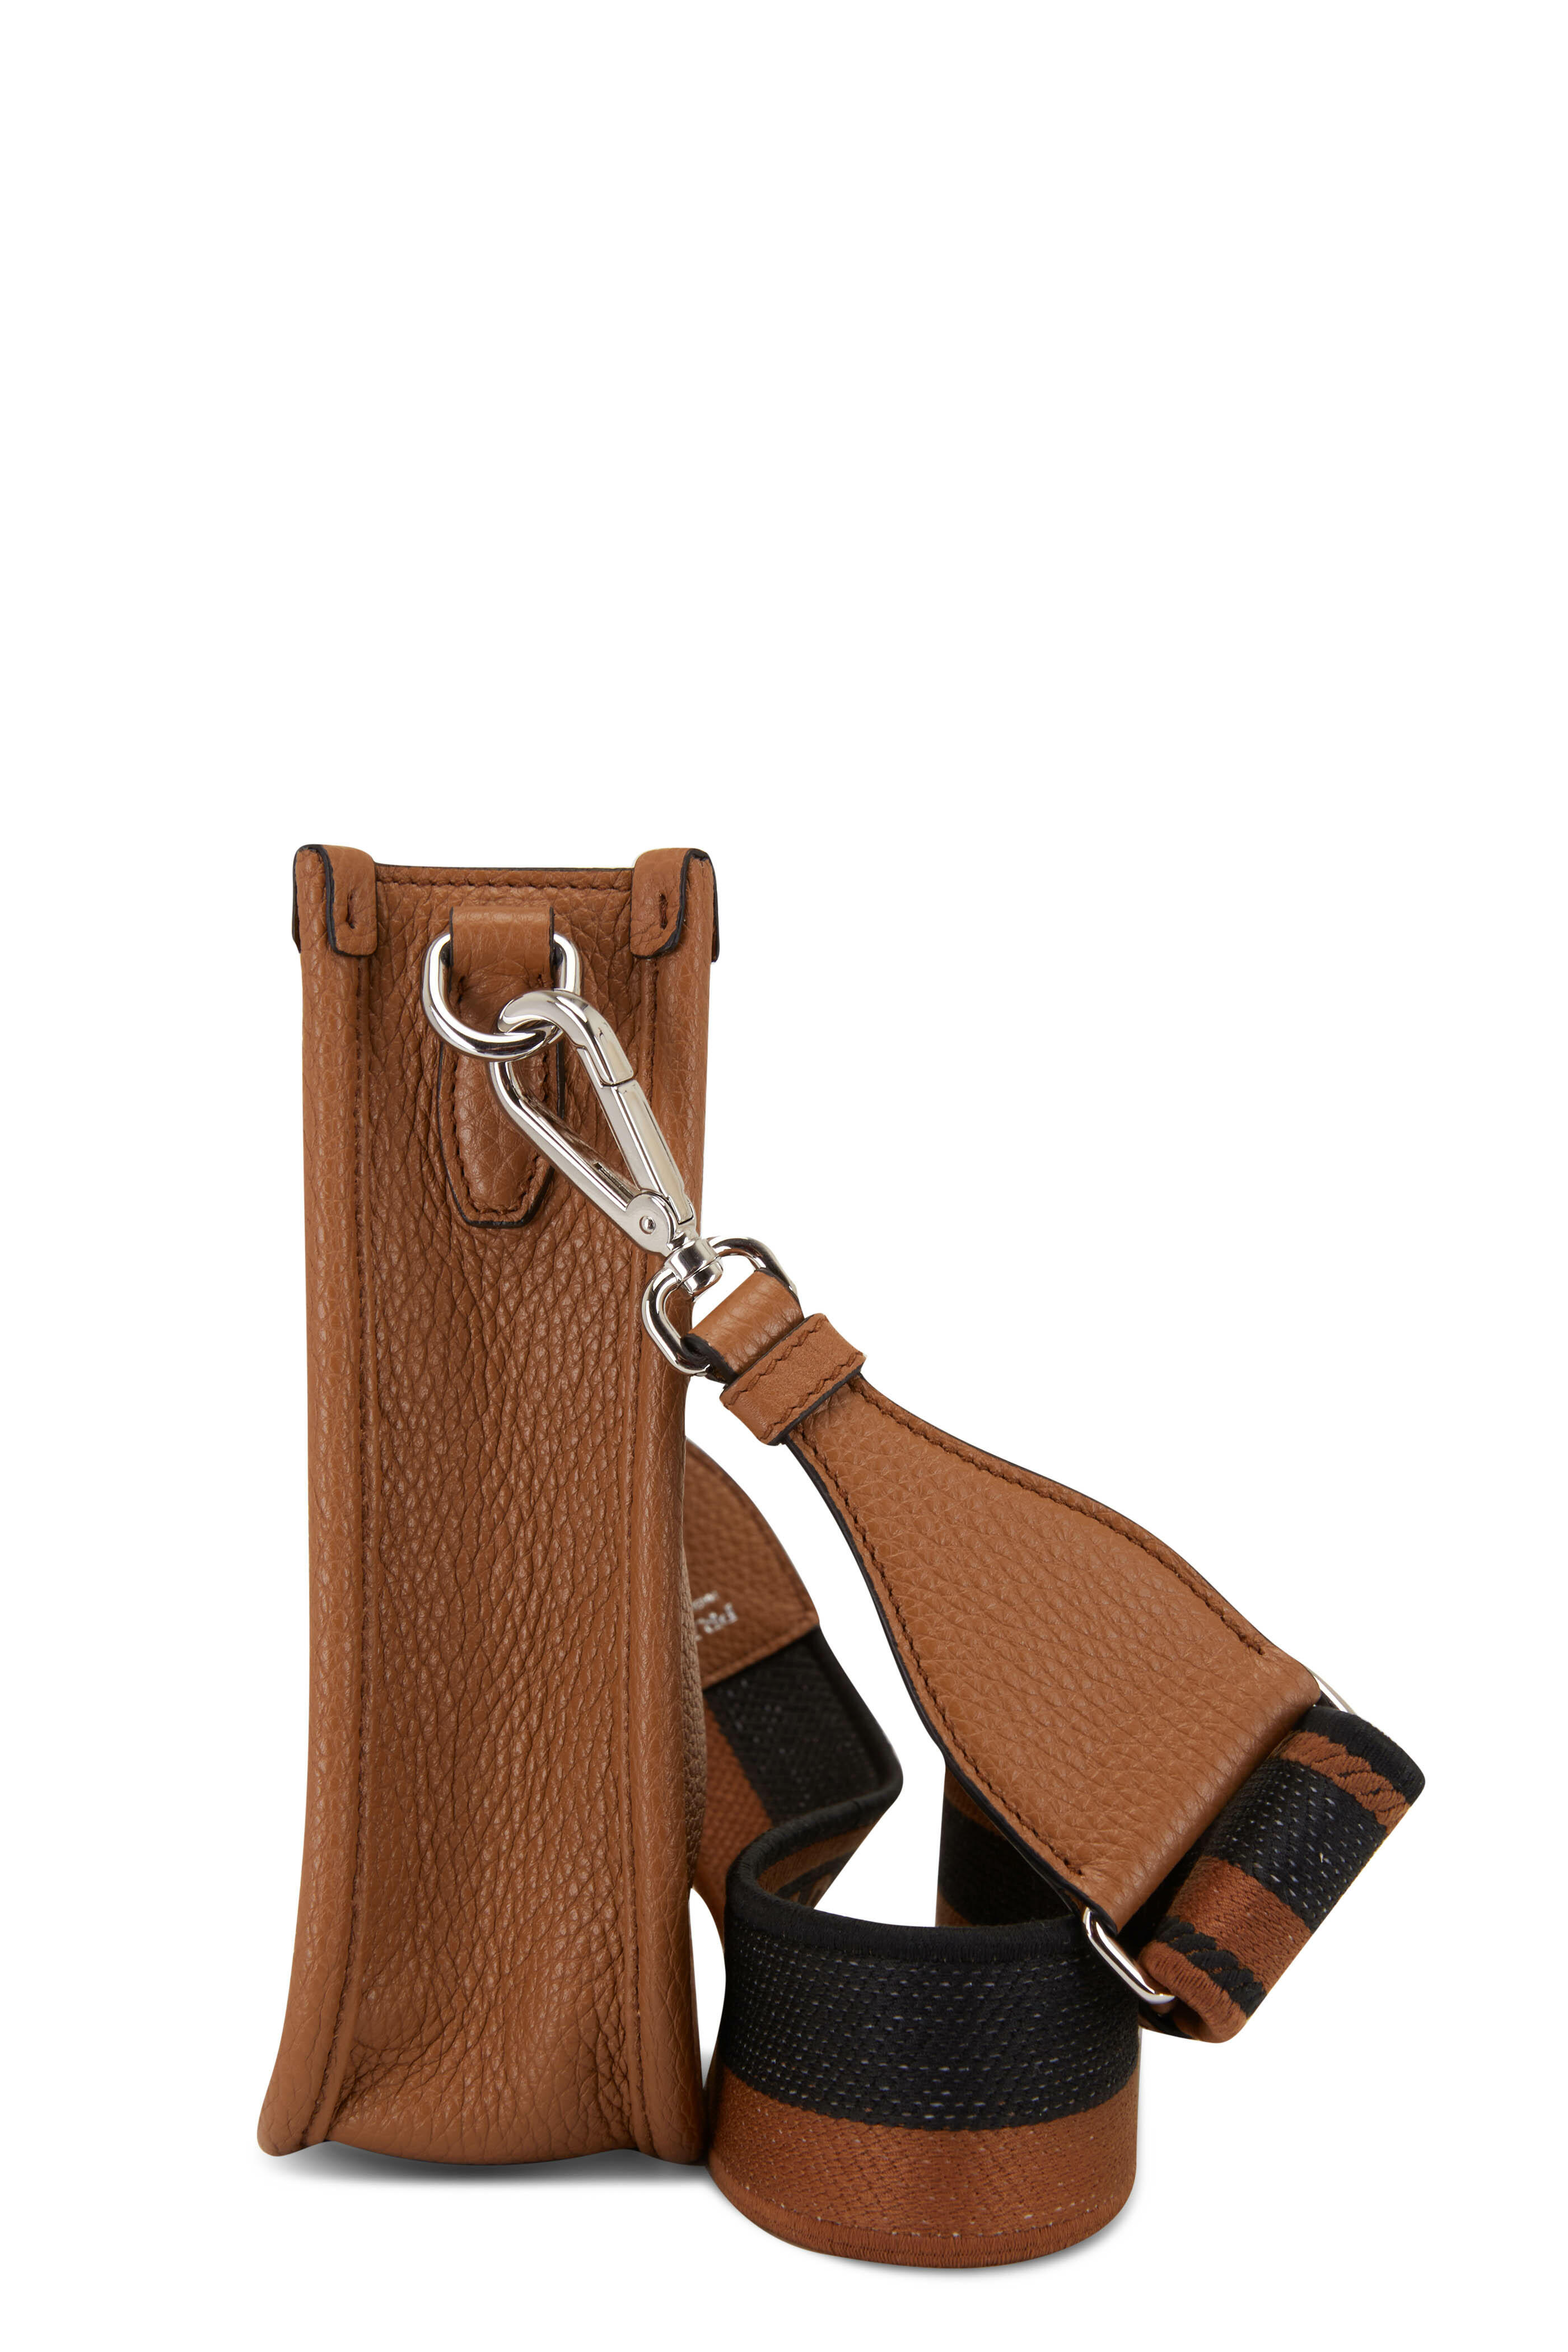 Prada - Caramel Leather Mini Shoulder Bag